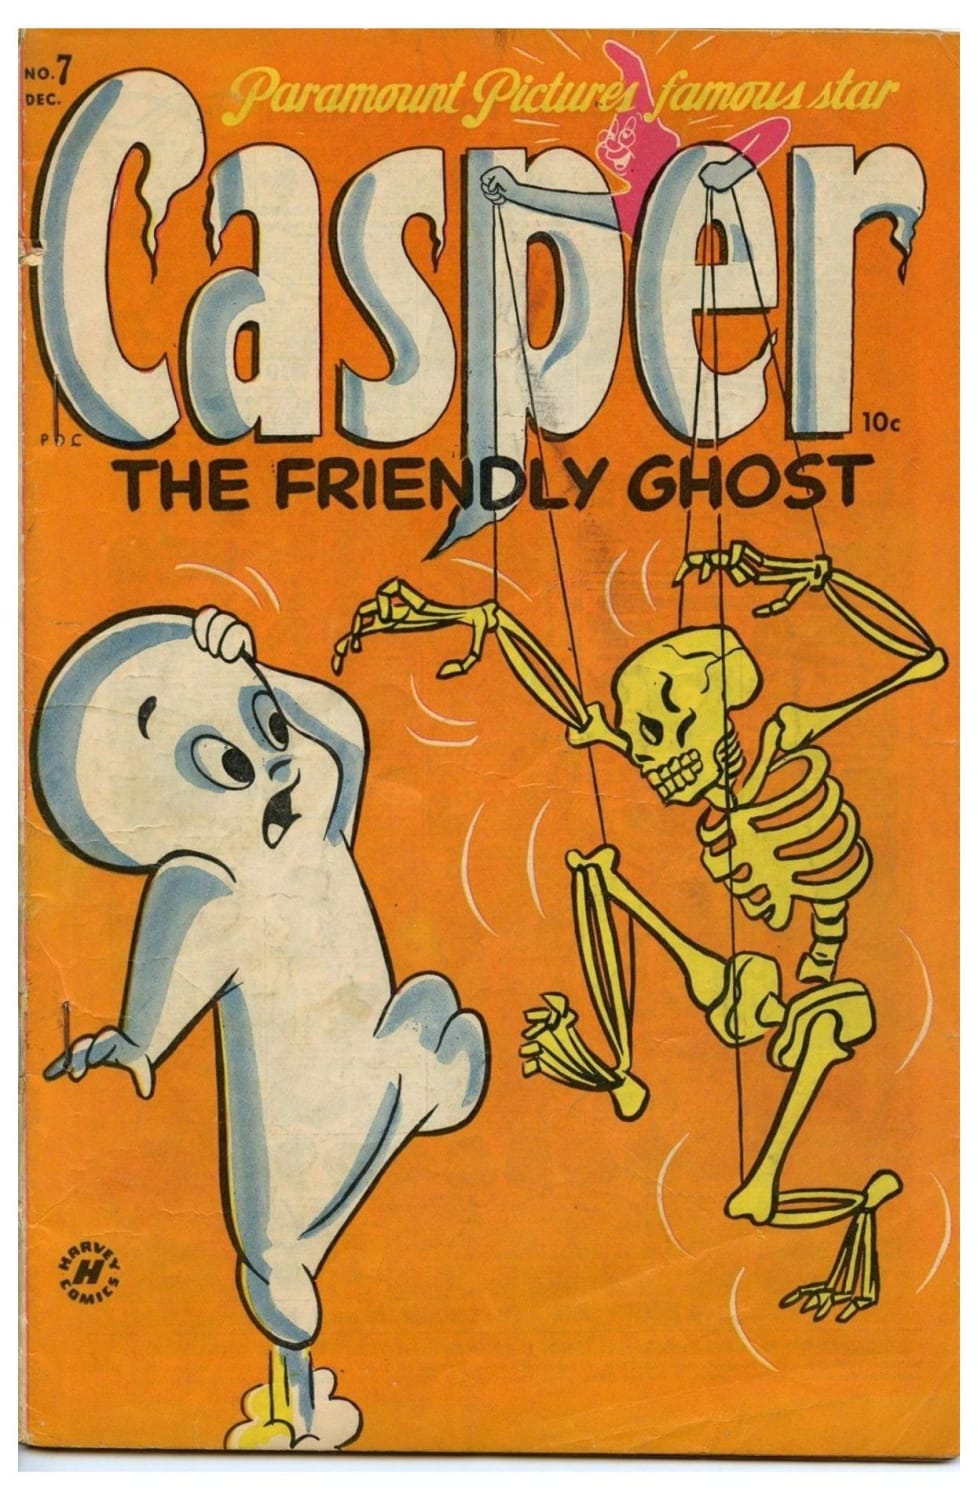 Vintage comics ⌛ #wallpaper #iphone #vintage #retro #comics #wallpaperiphonevintageretrocomics | Retro poster, Vintage posters, Casper the friendly ghost